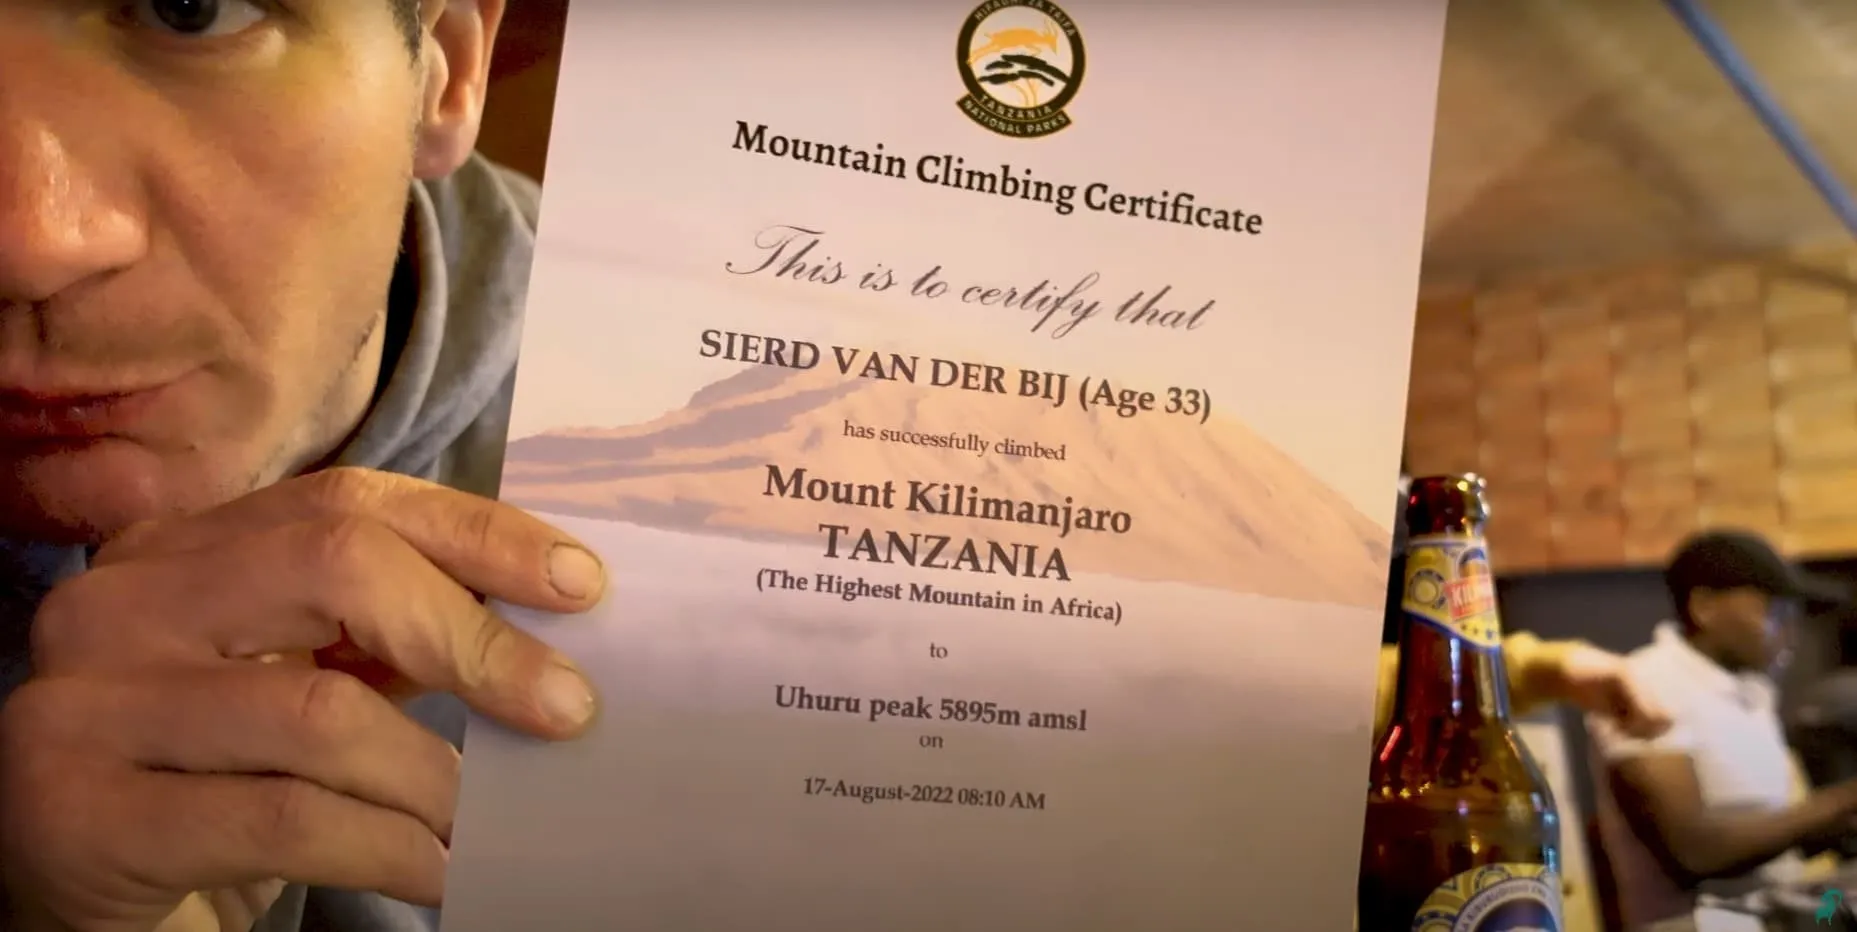 Hoe moet ik de Kilimanjaro beklimmen?